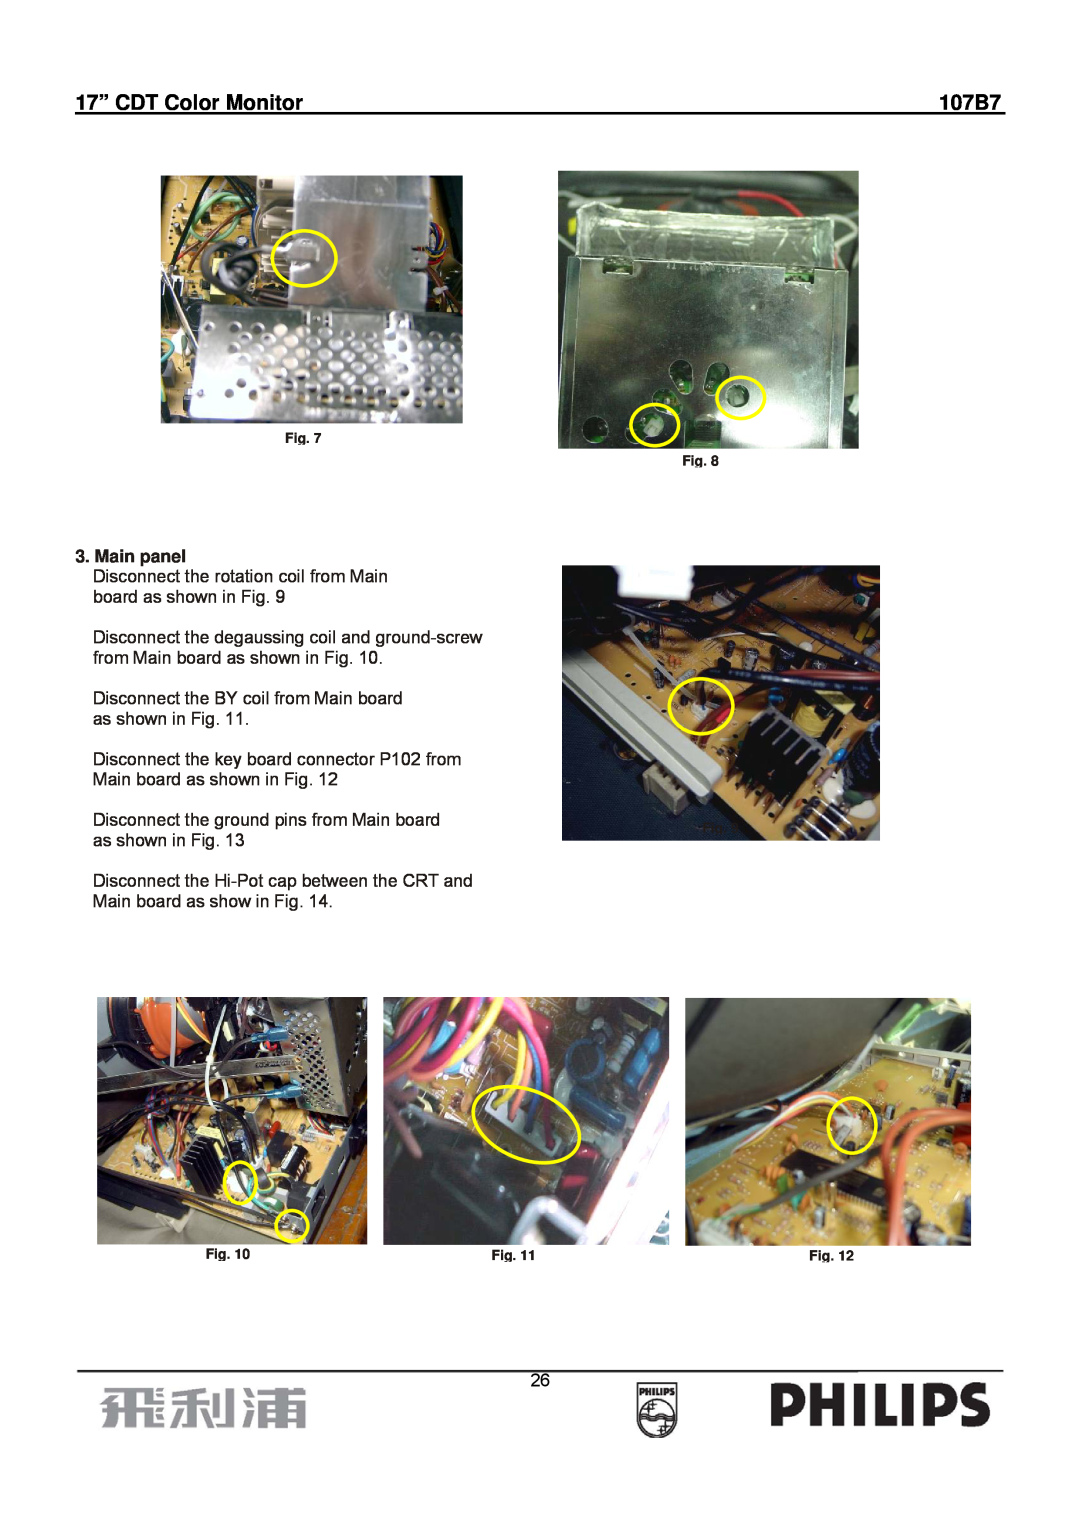 Philips 107B7 manual Main panel, 17” CDT Color Monitor 